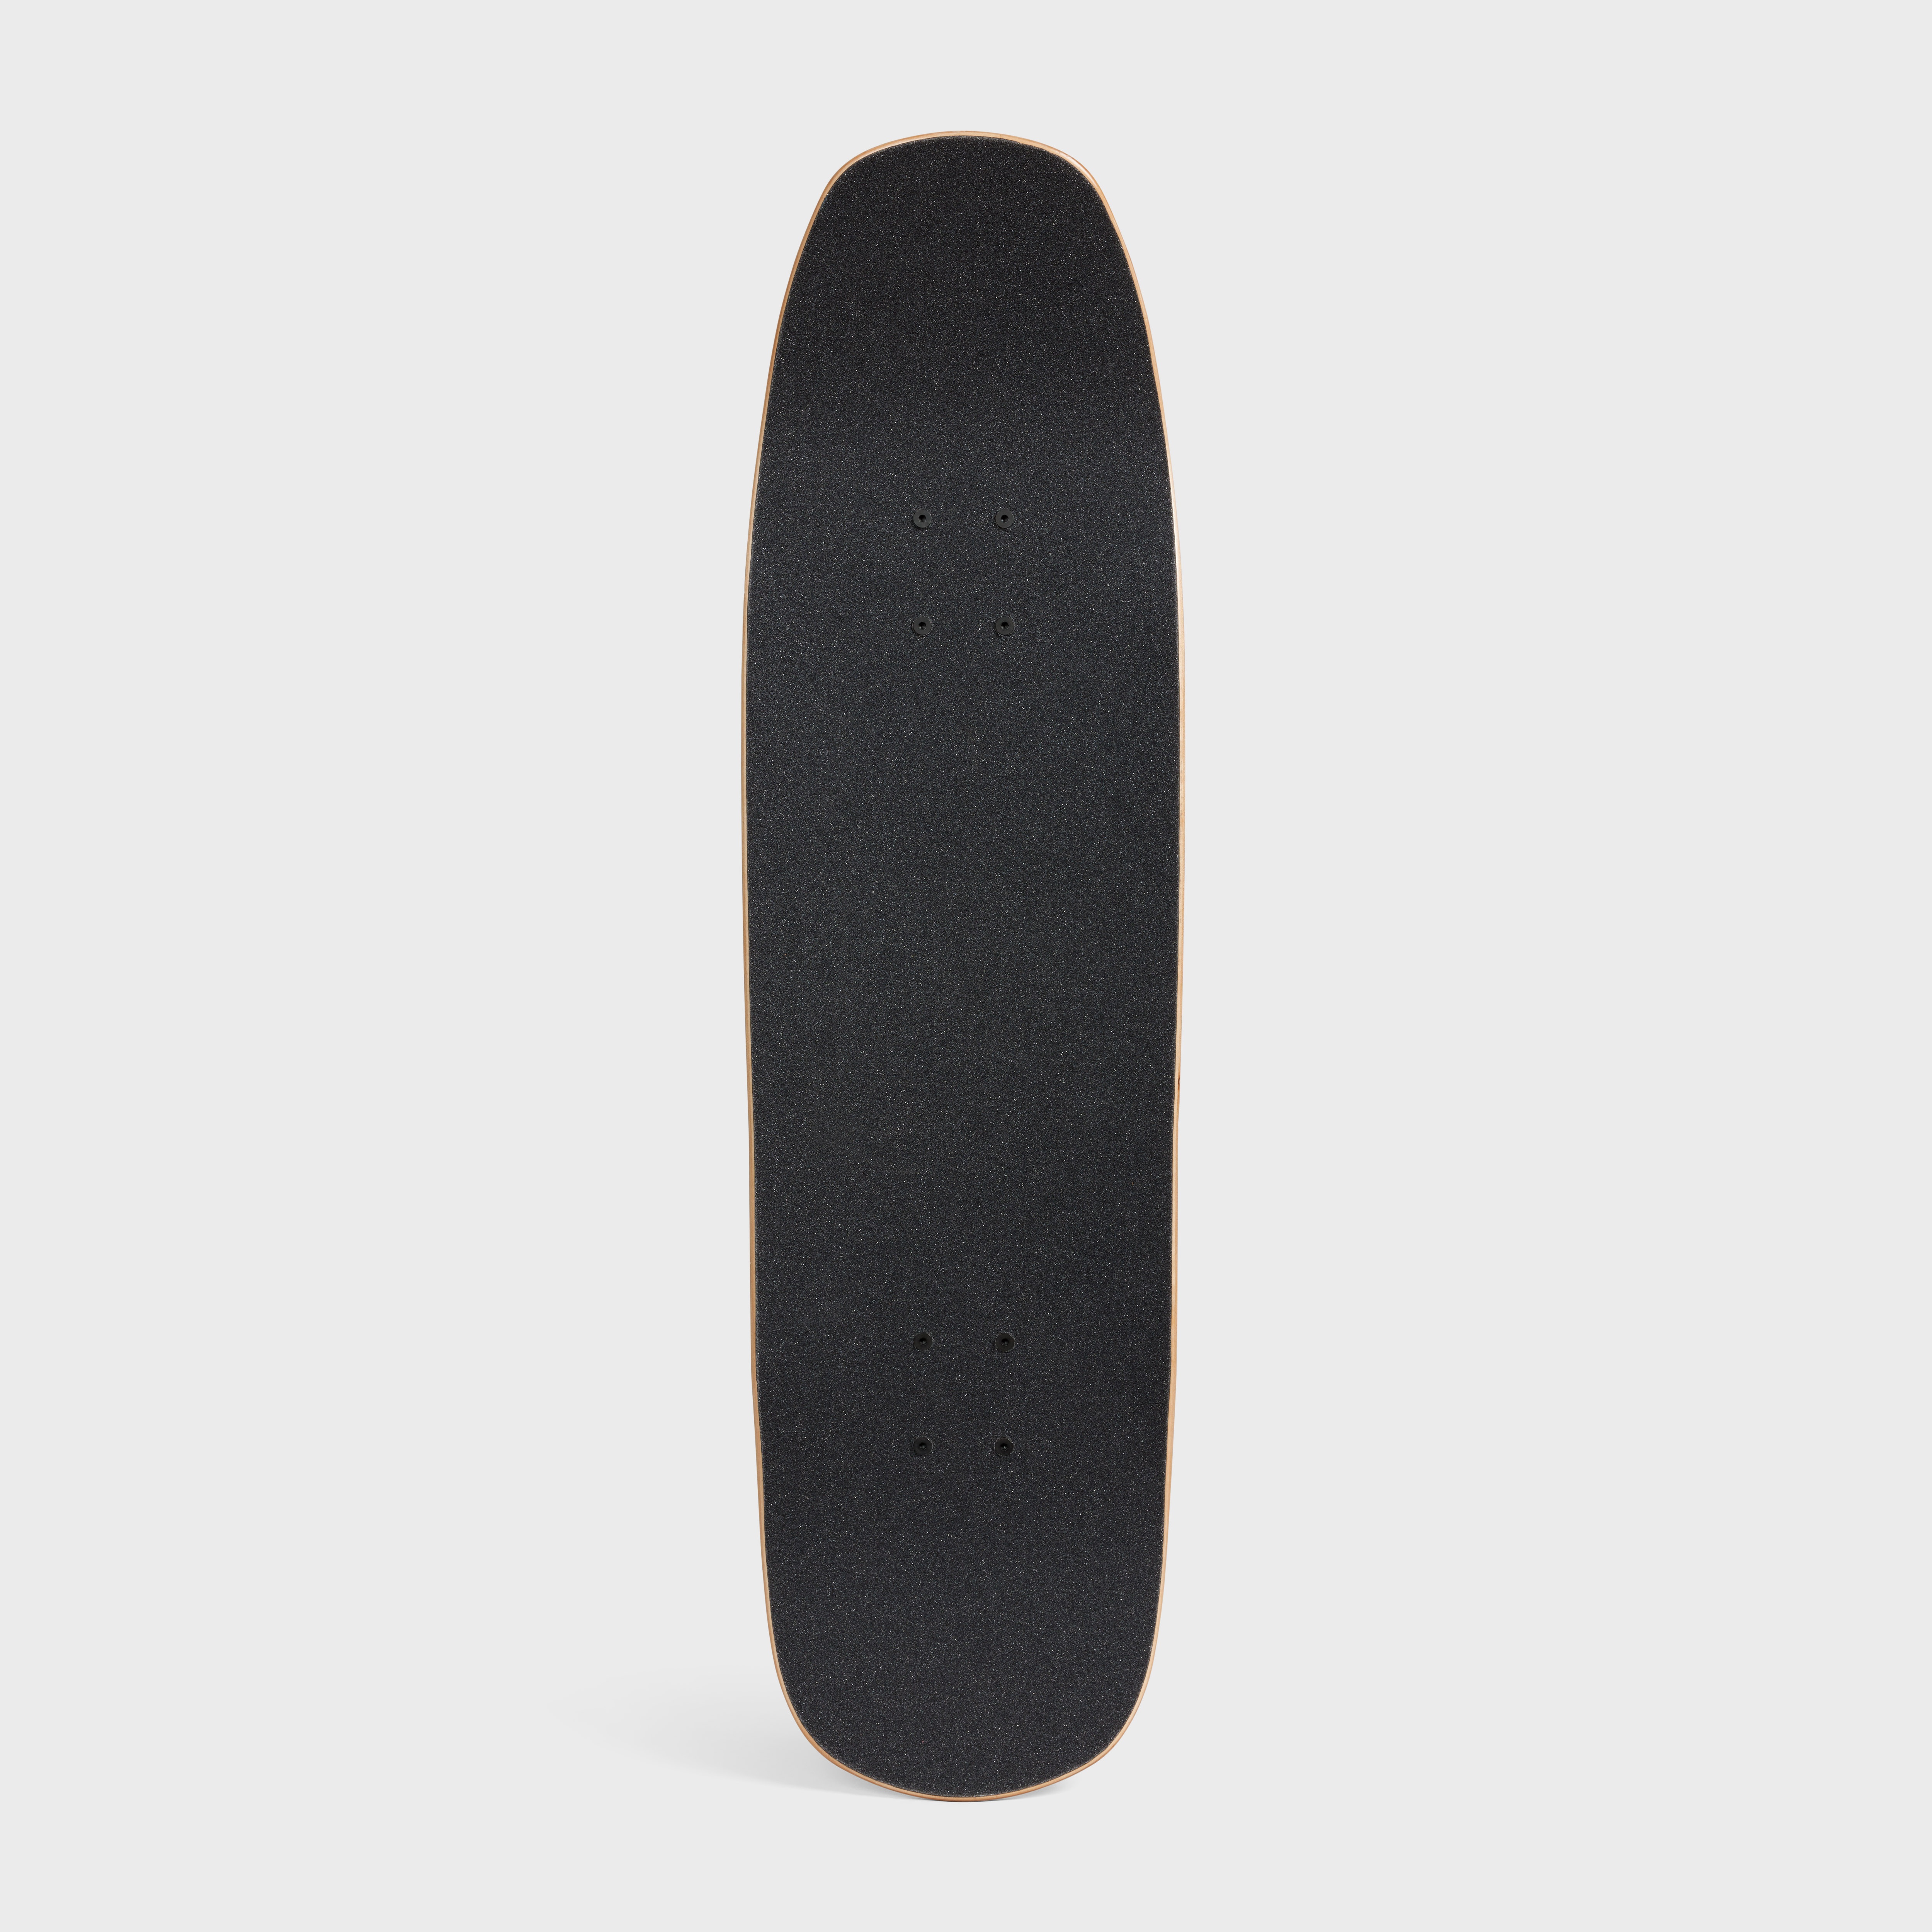 Skateboard with David Weiss Wave print - 2